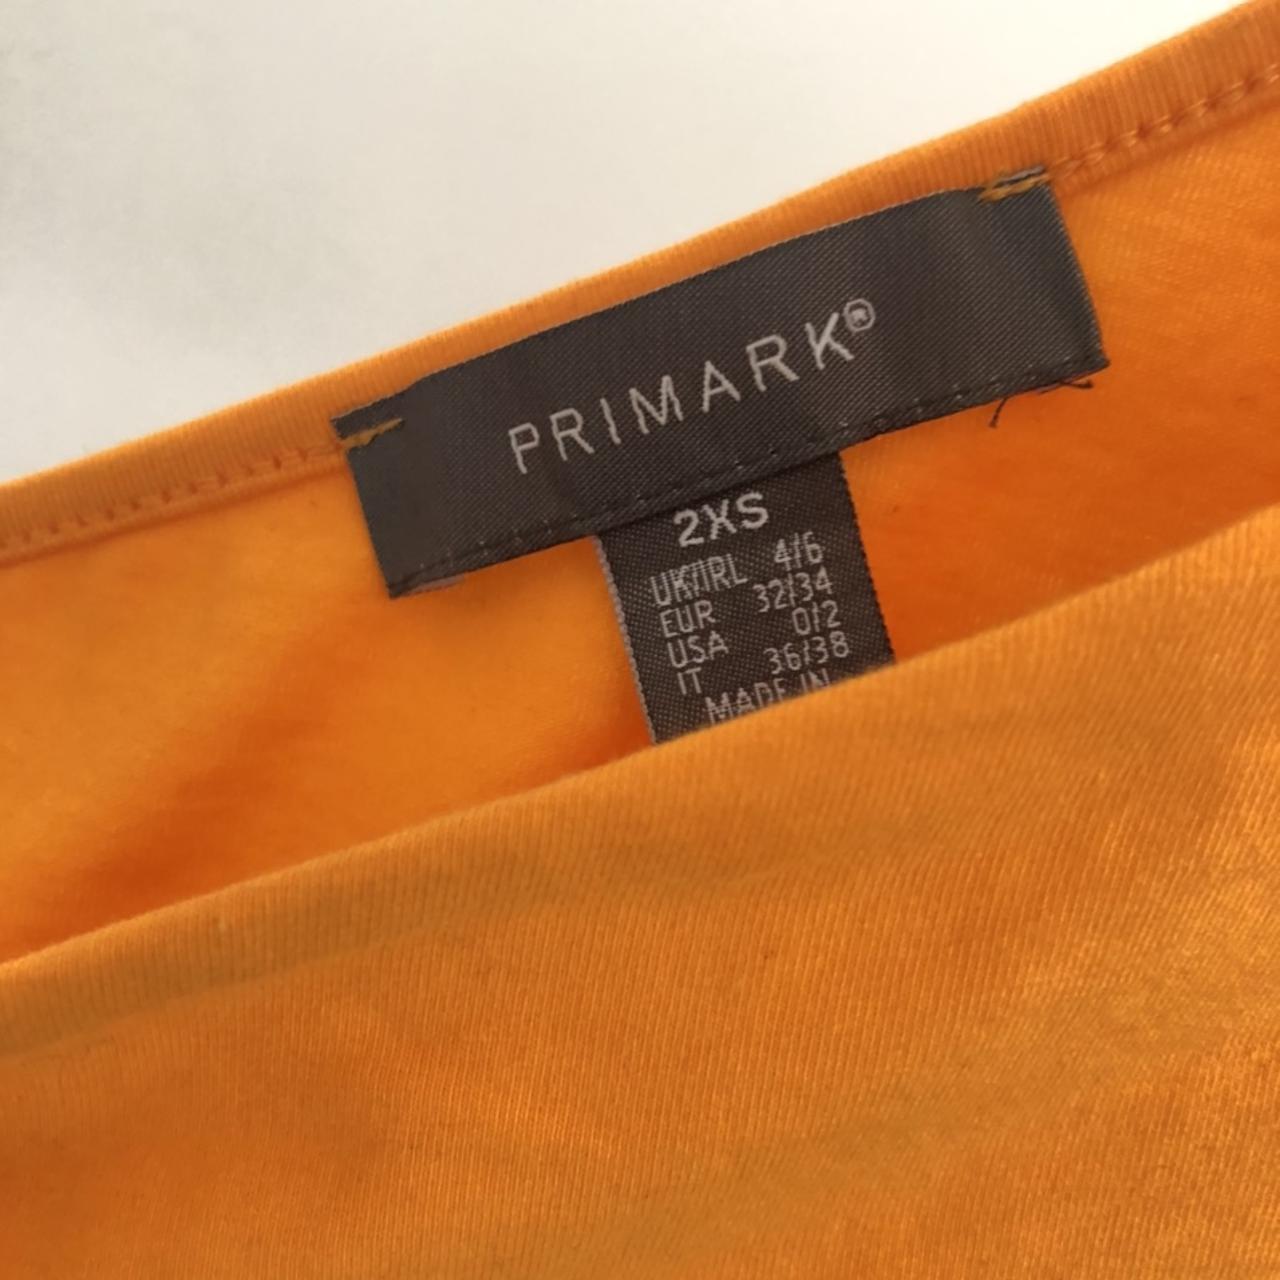 PRIMARK LOVE TO Lounge Shorts & Bra Set Size M 12/14 Orange Ribbed £2.50 -  PicClick UK